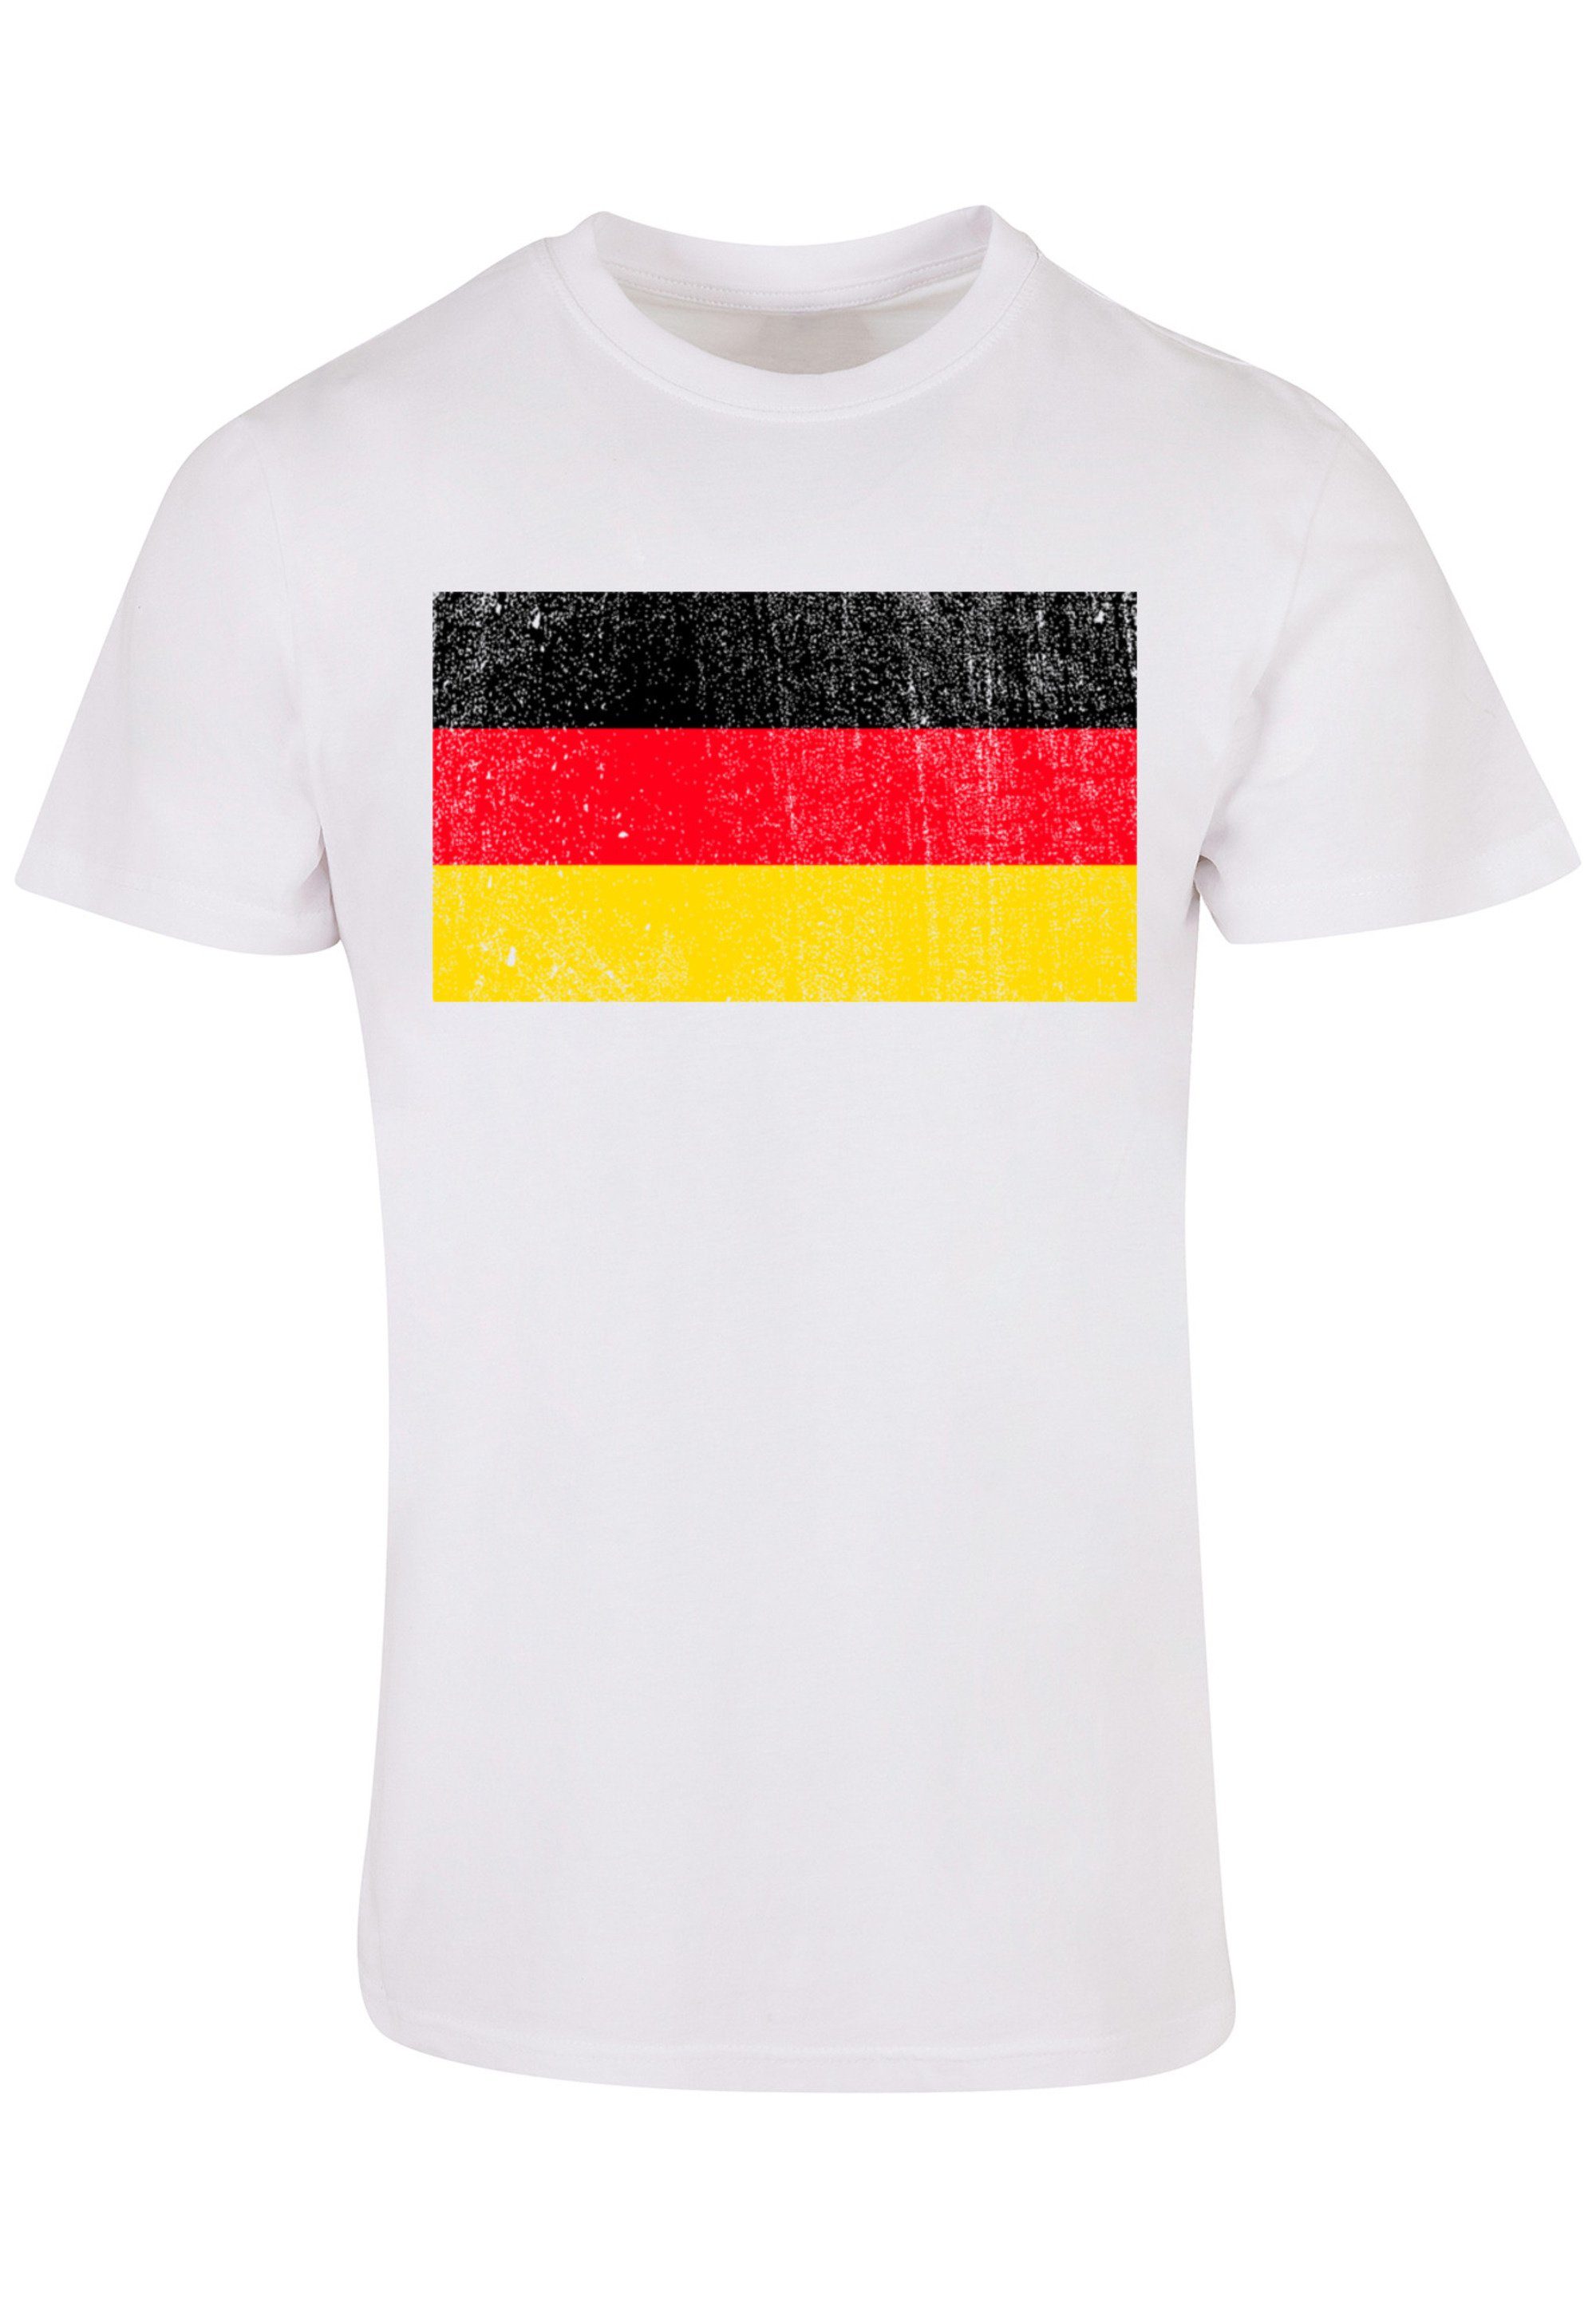 Deutschland T-Shirt Print Germany weiß distressed F4NT4STIC Flagge